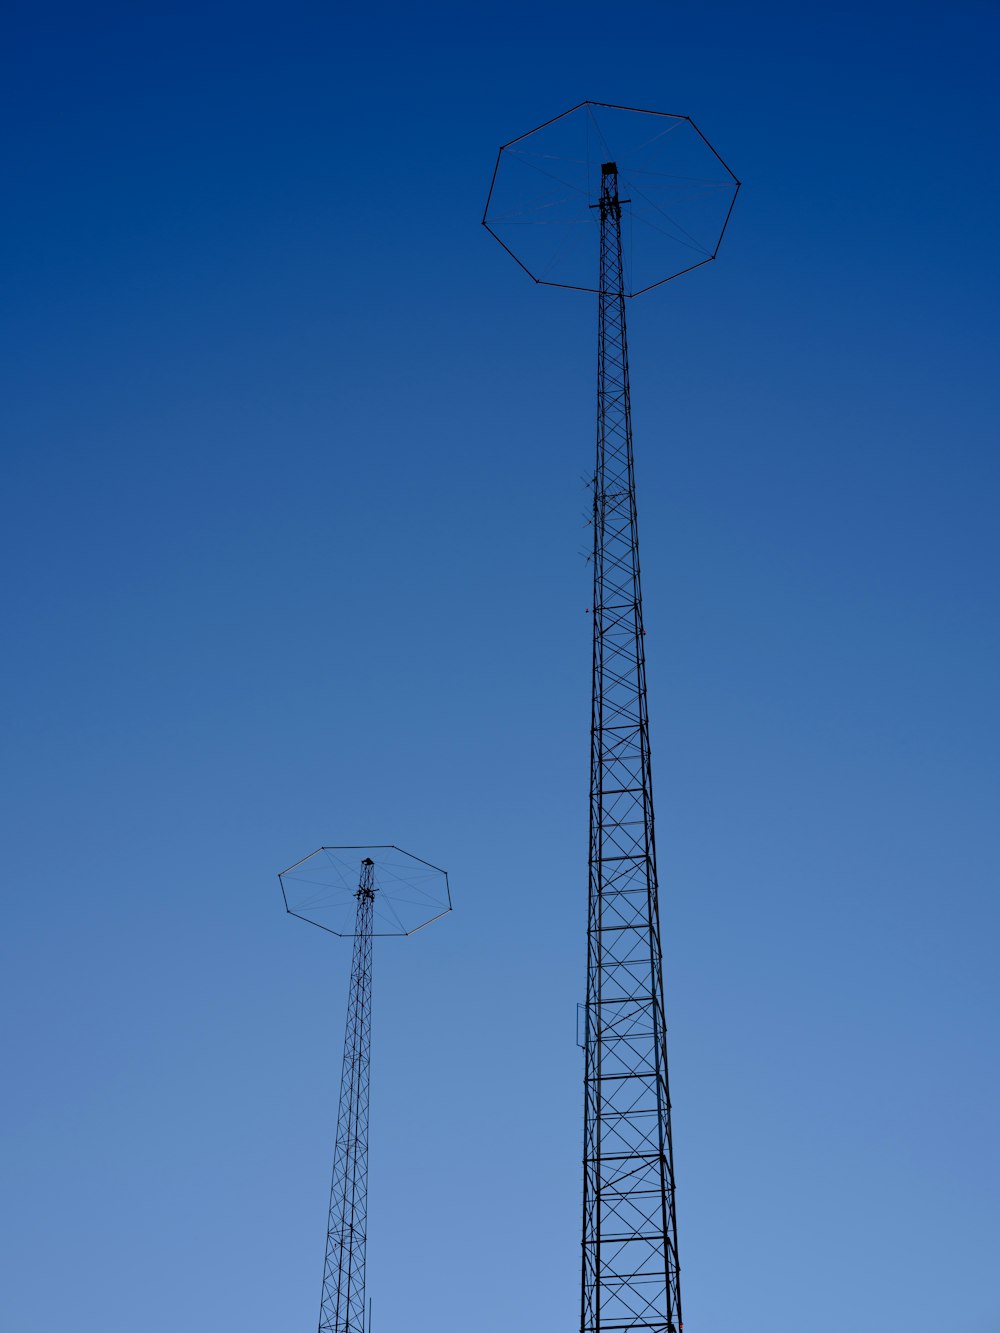 black steel electric post under blue sky during daytime